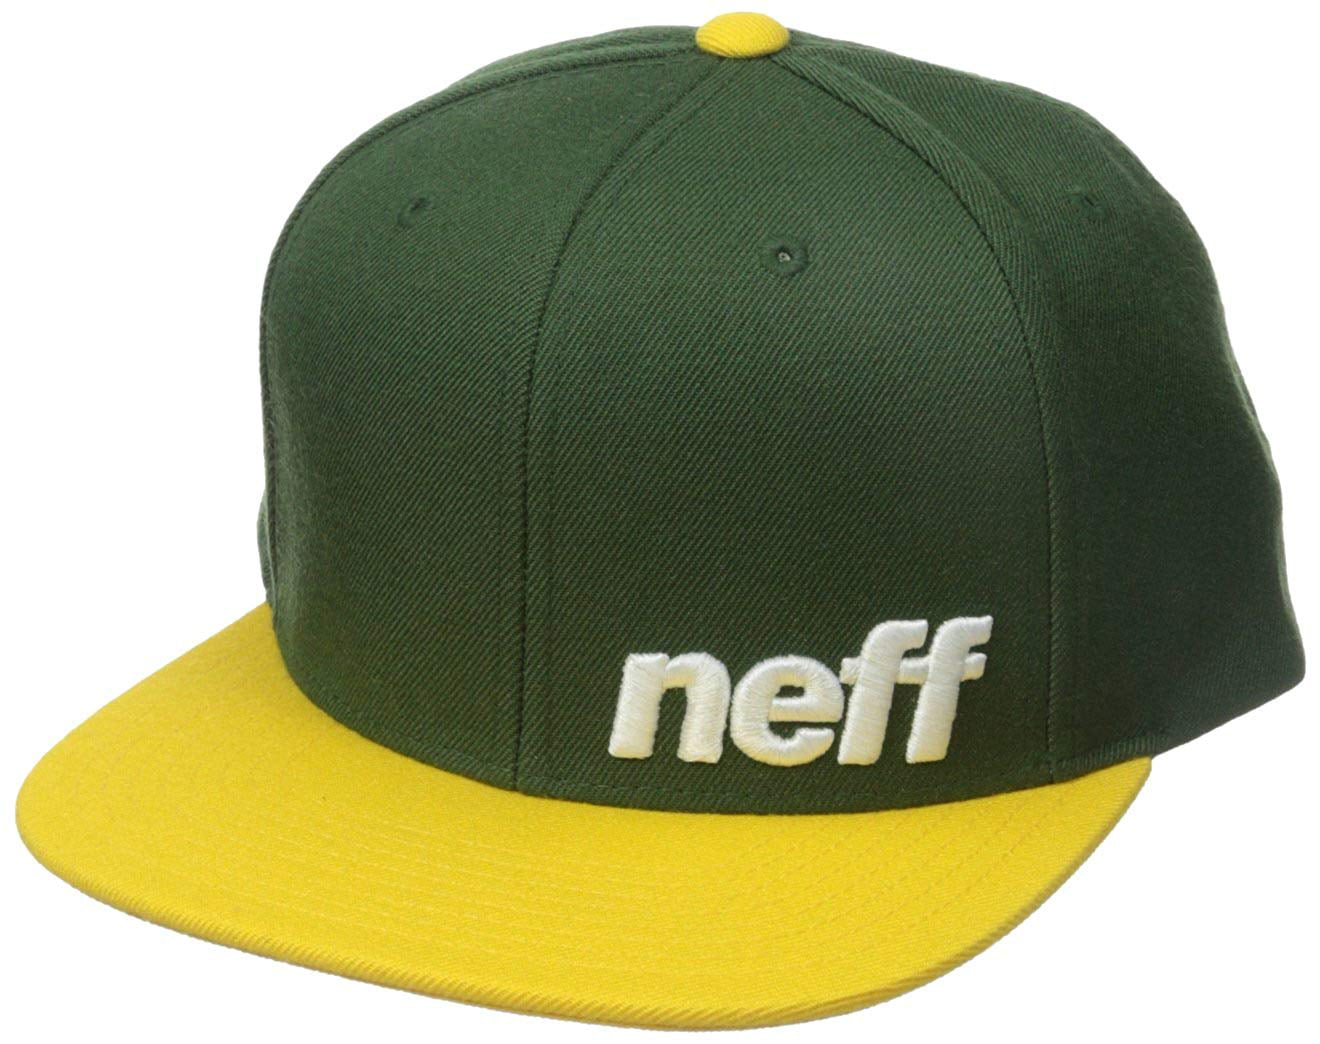 NEFF Daily Flat Billed Adjustable Snapback Hat 